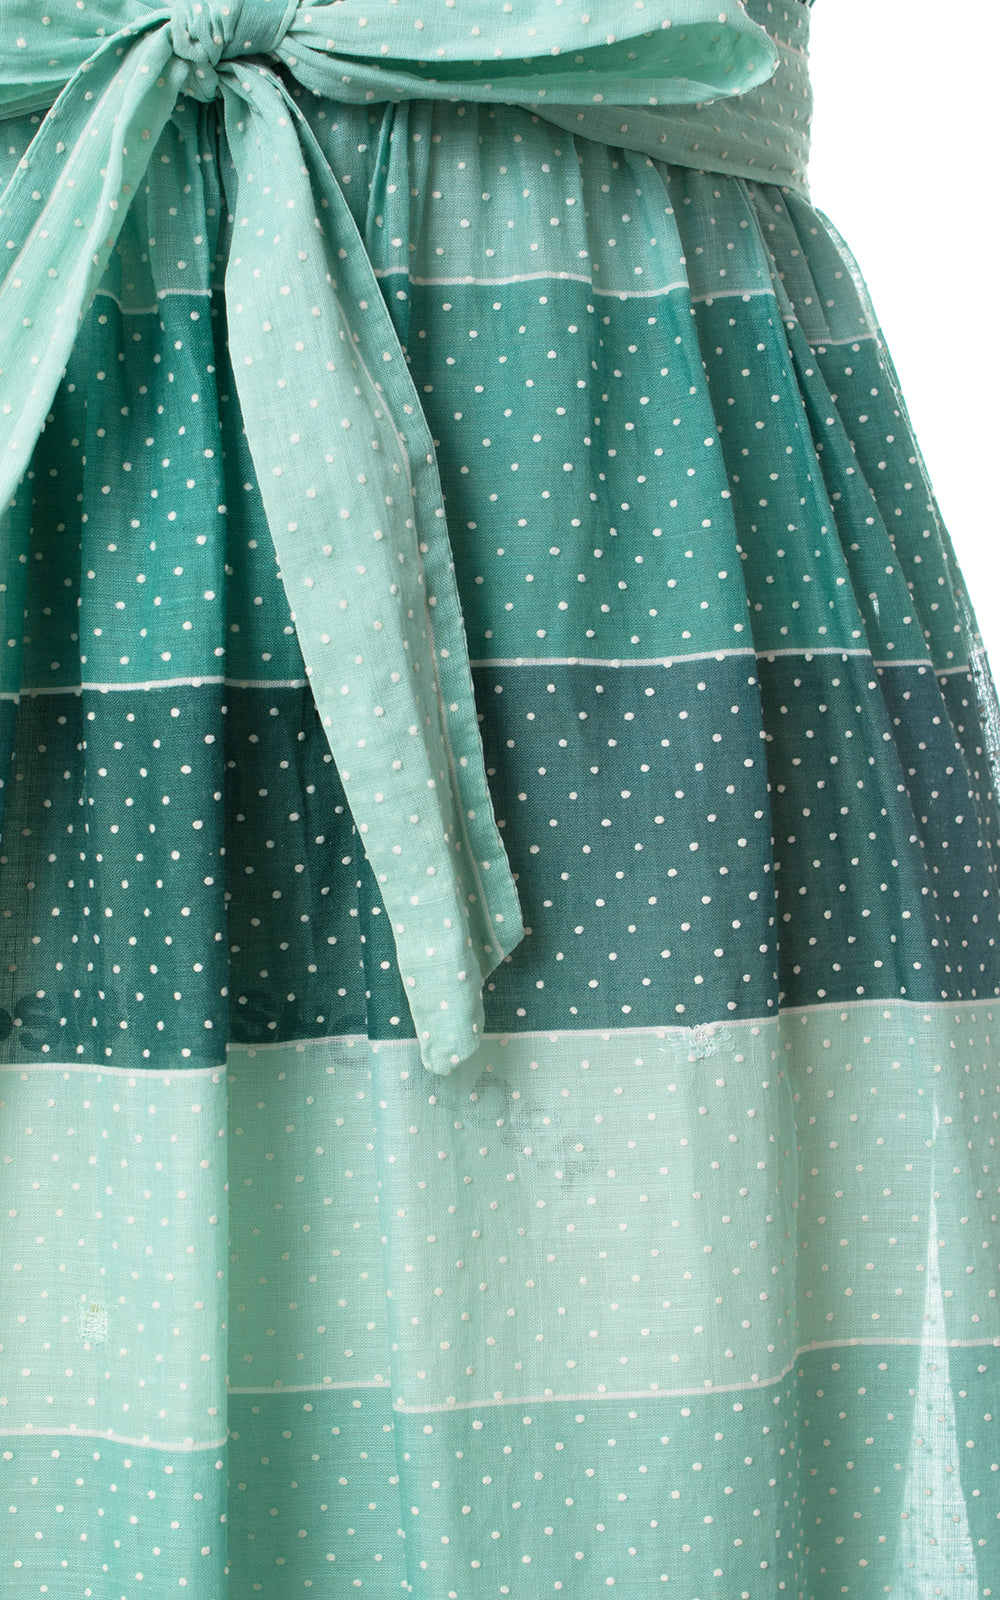 1950s Polka Dot Striped Sheer Dress